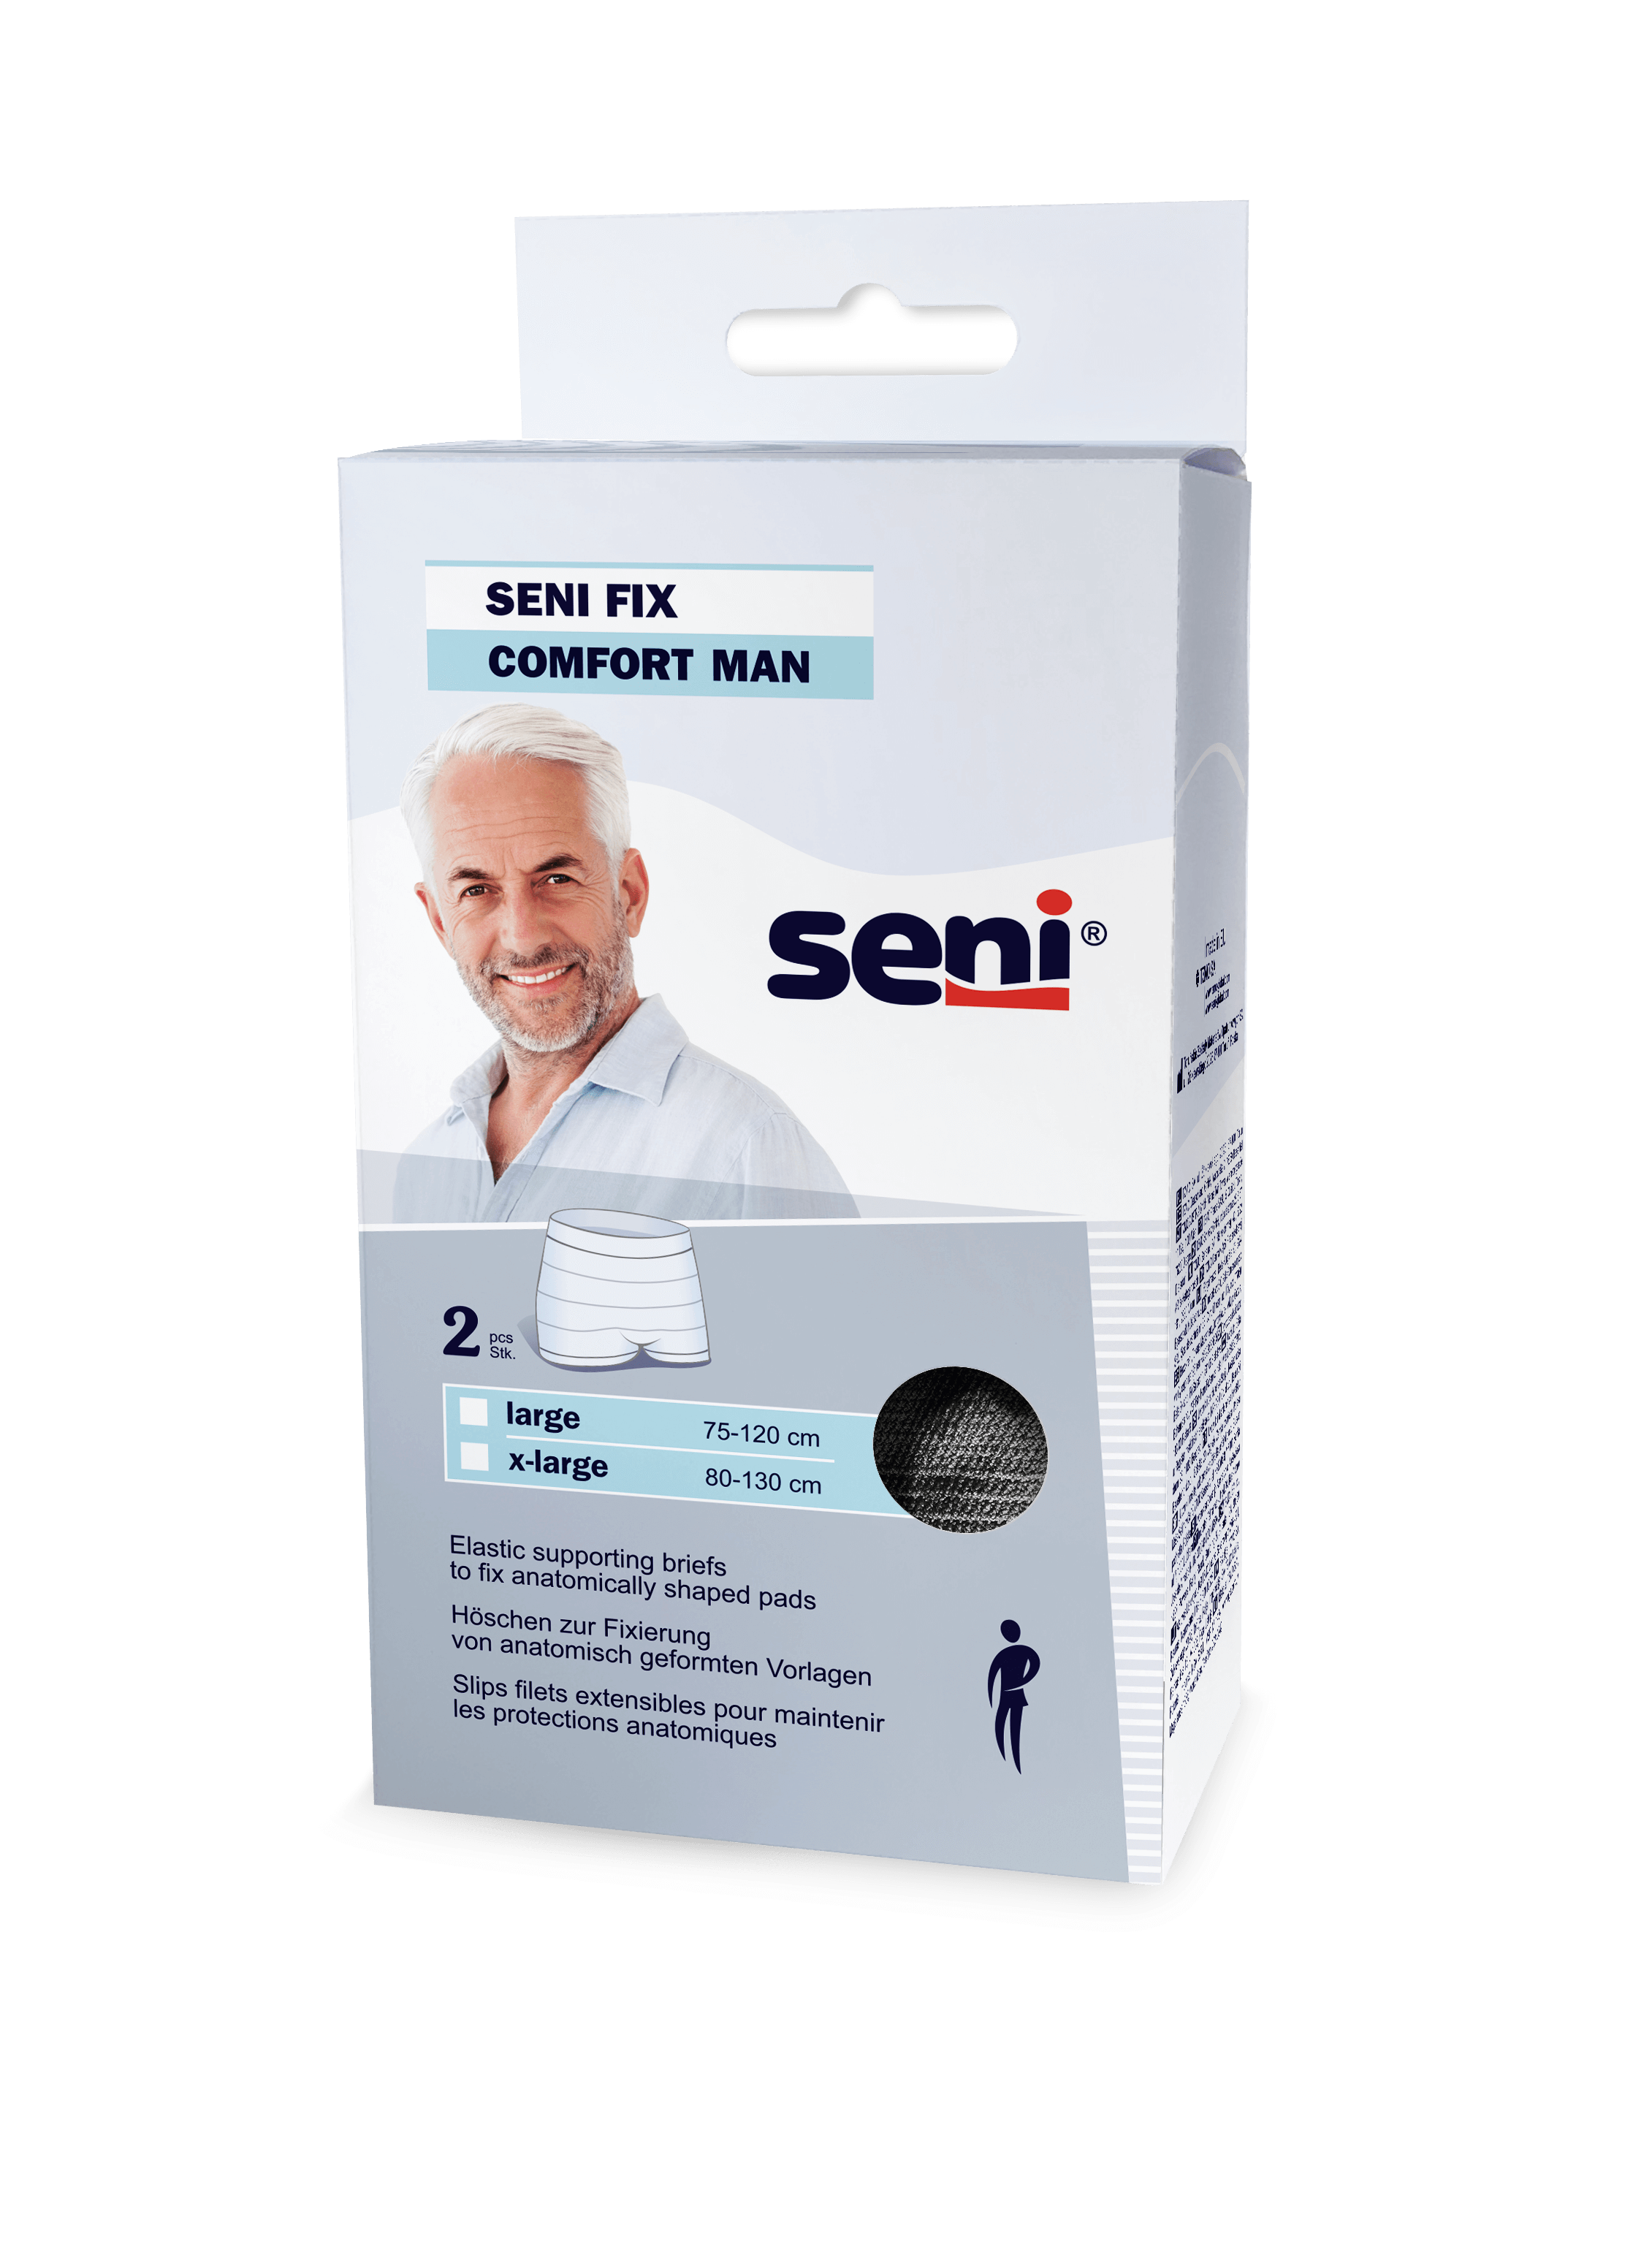 SENI Fix Comfort Man, Fixierhosen für Männer